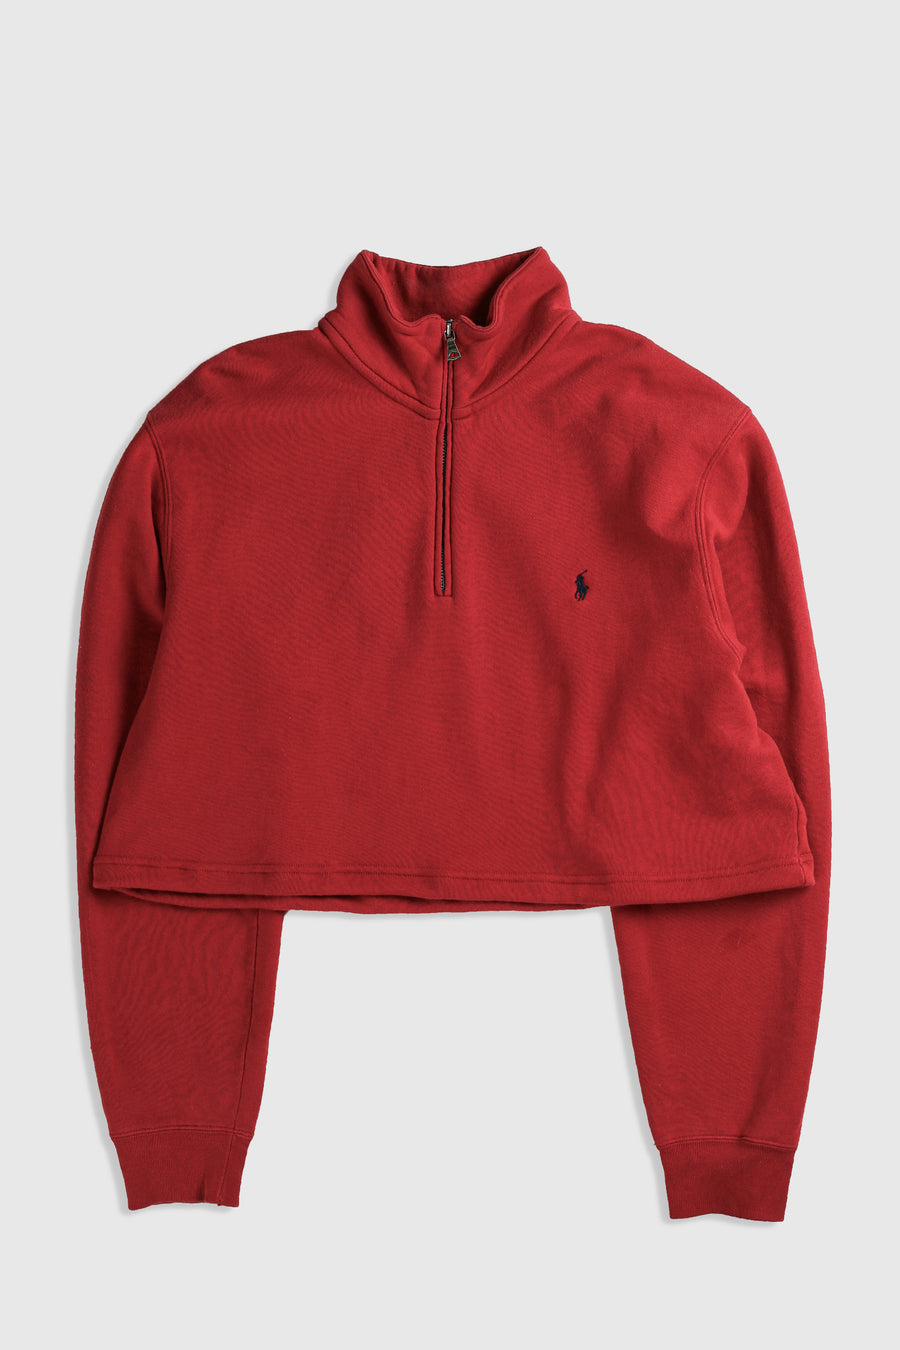 Rework Polo Crop Sweatshirt - XL